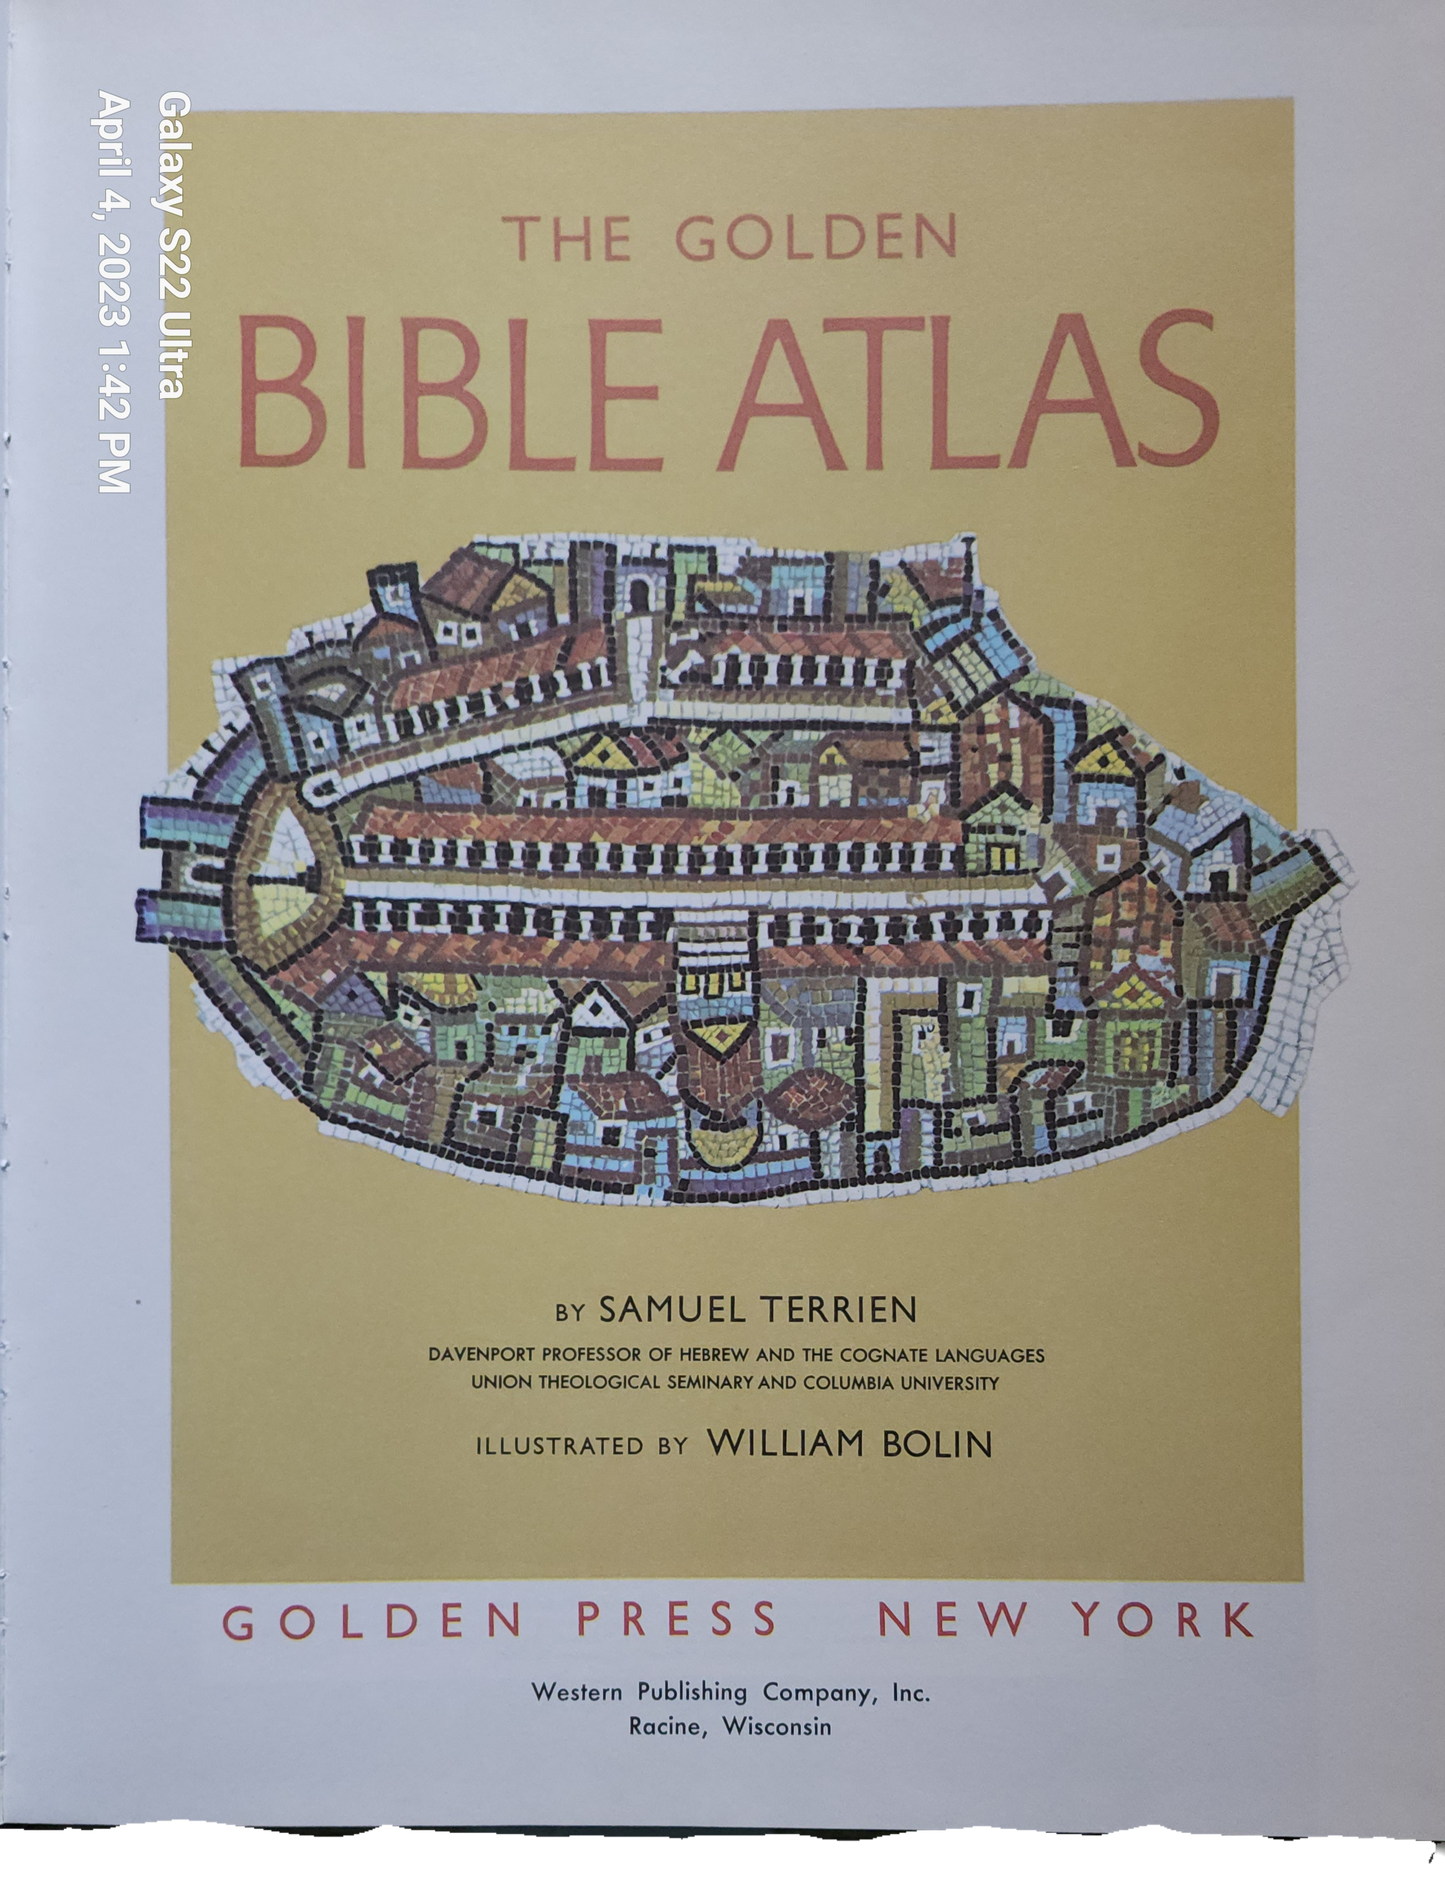 The Golden Bible Atlas Samuel Terrien
Illustrated by William Bolin Golden Press hardcover 1957